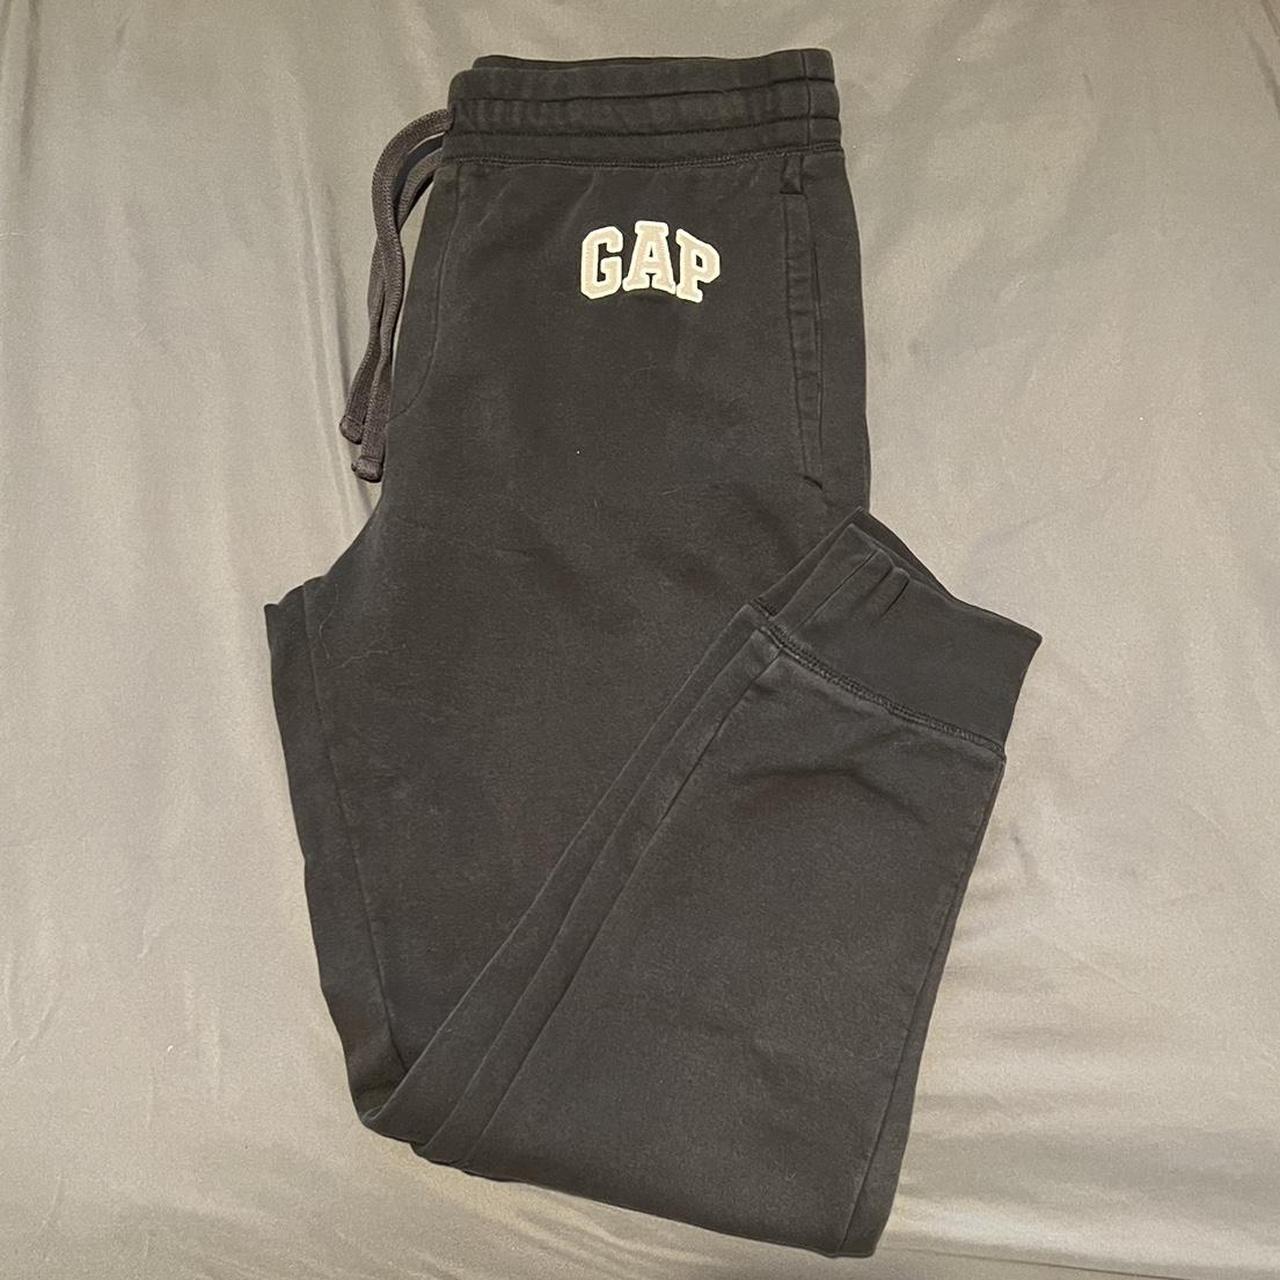 gap black sweatpants. - measurements - Depop